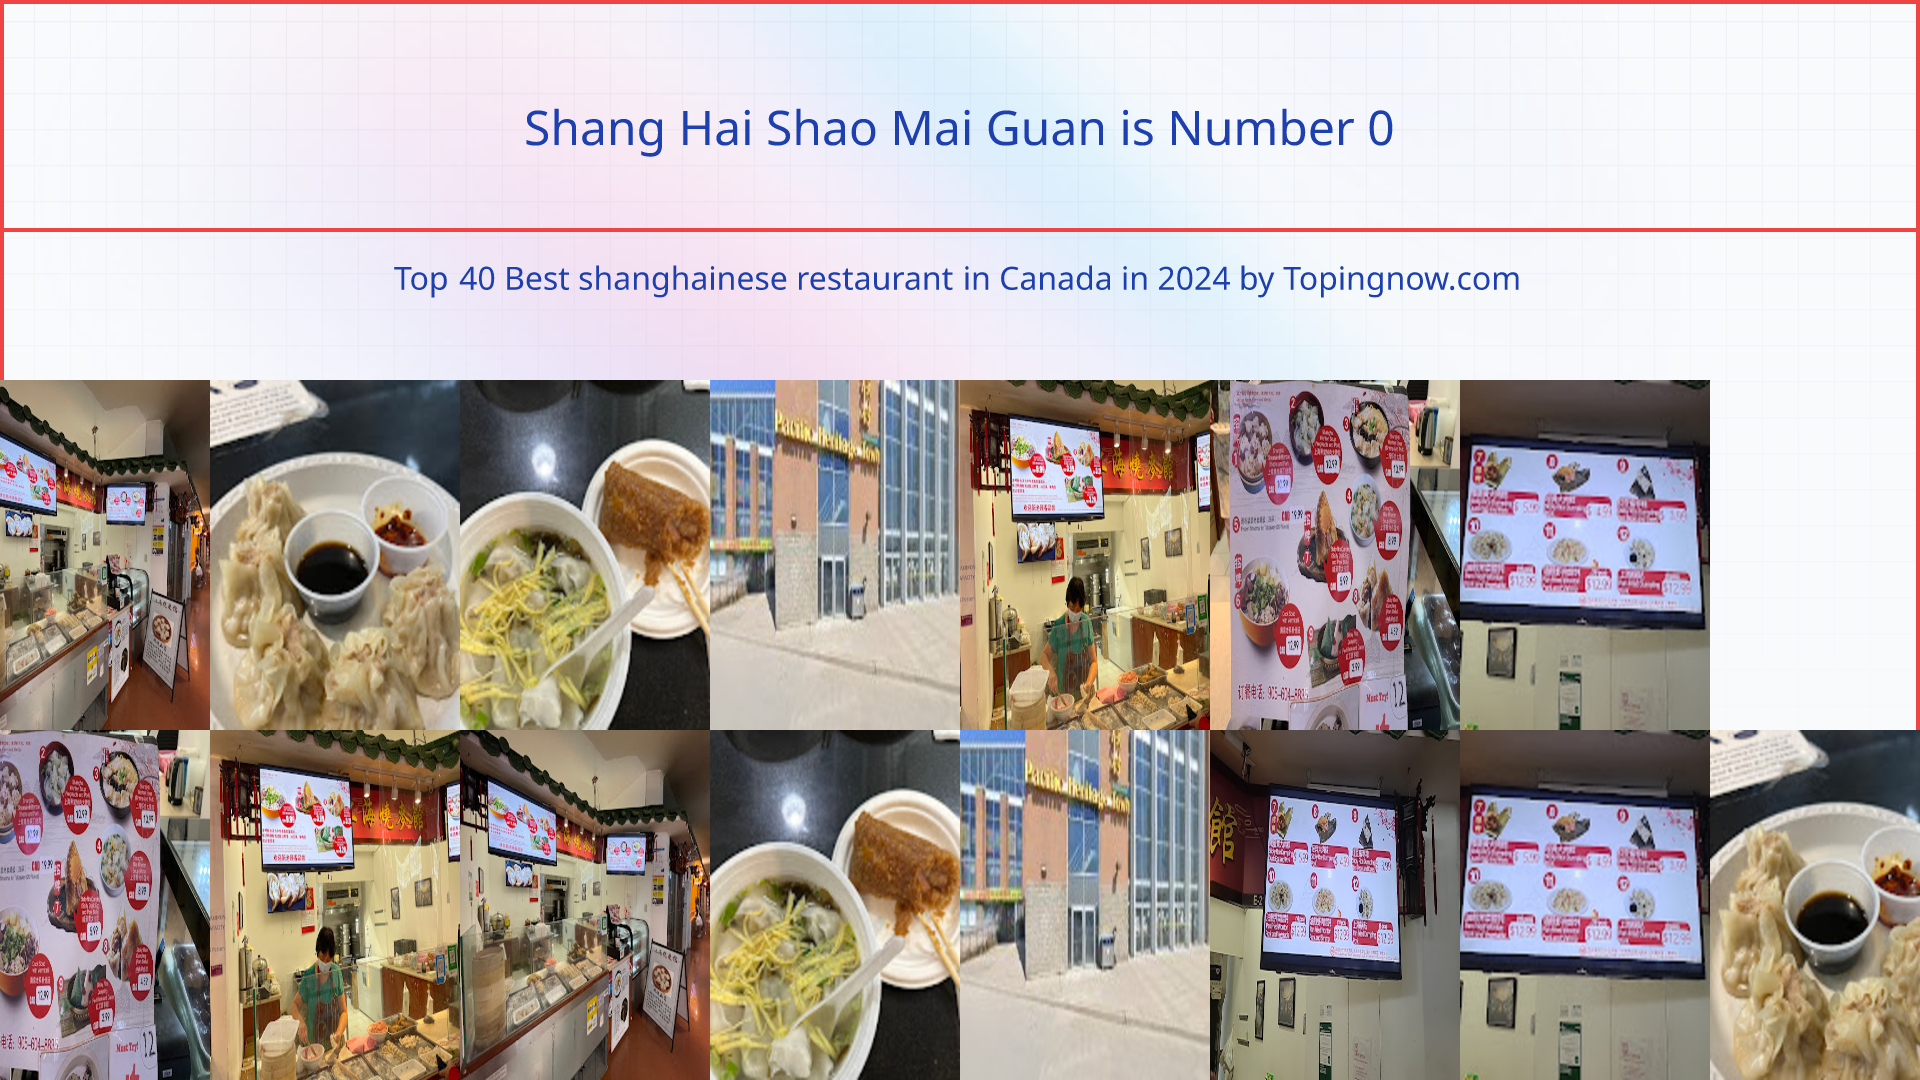 Shang Hai Shao Mai Guan: Top 40 Best shanghainese restaurant in Canada in 2024